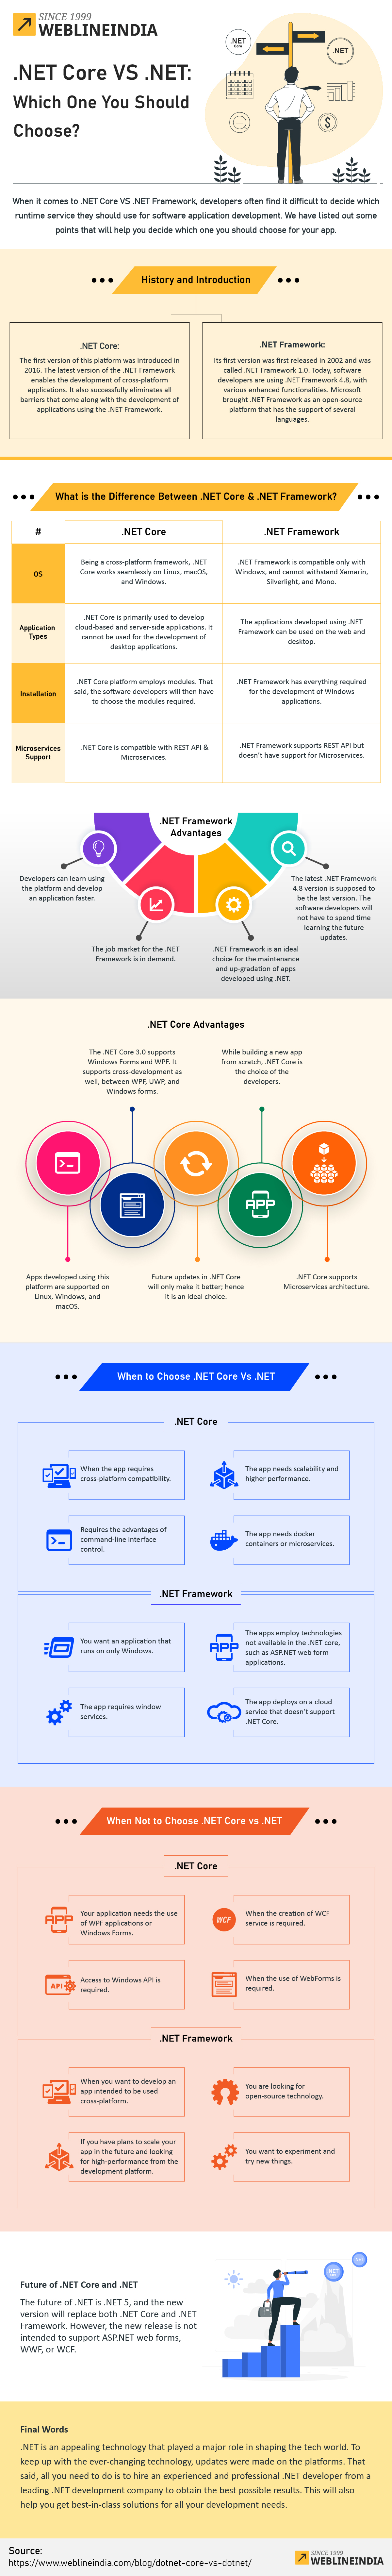 .NET Core VS .NET: Infographic